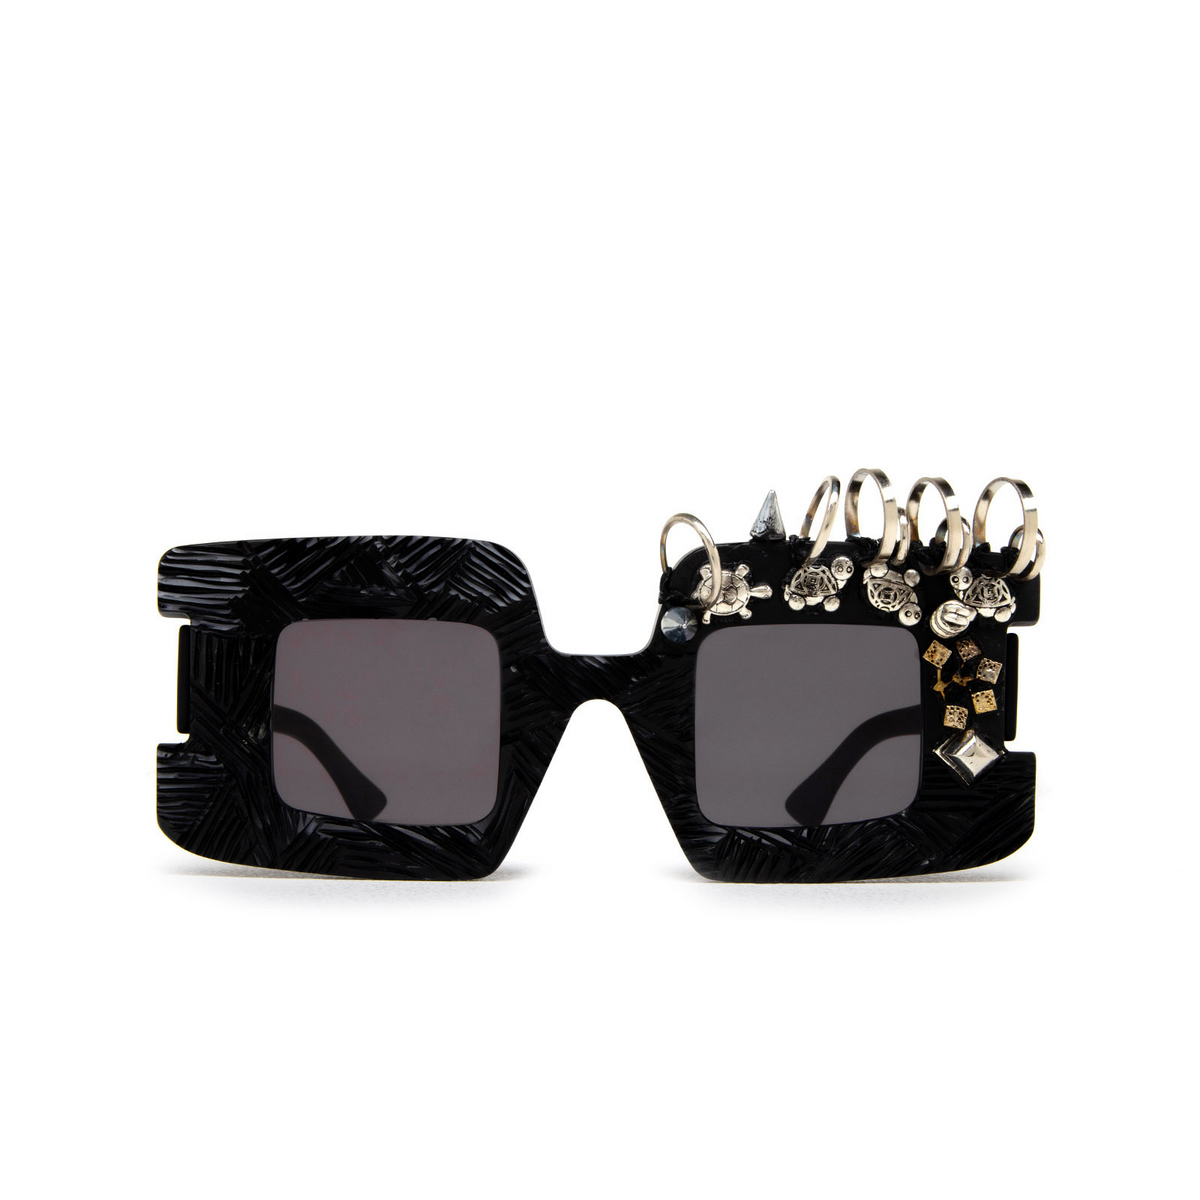 Kuboraum R3 Sunglasses BM LTD Black Matt Limited Edition - front view